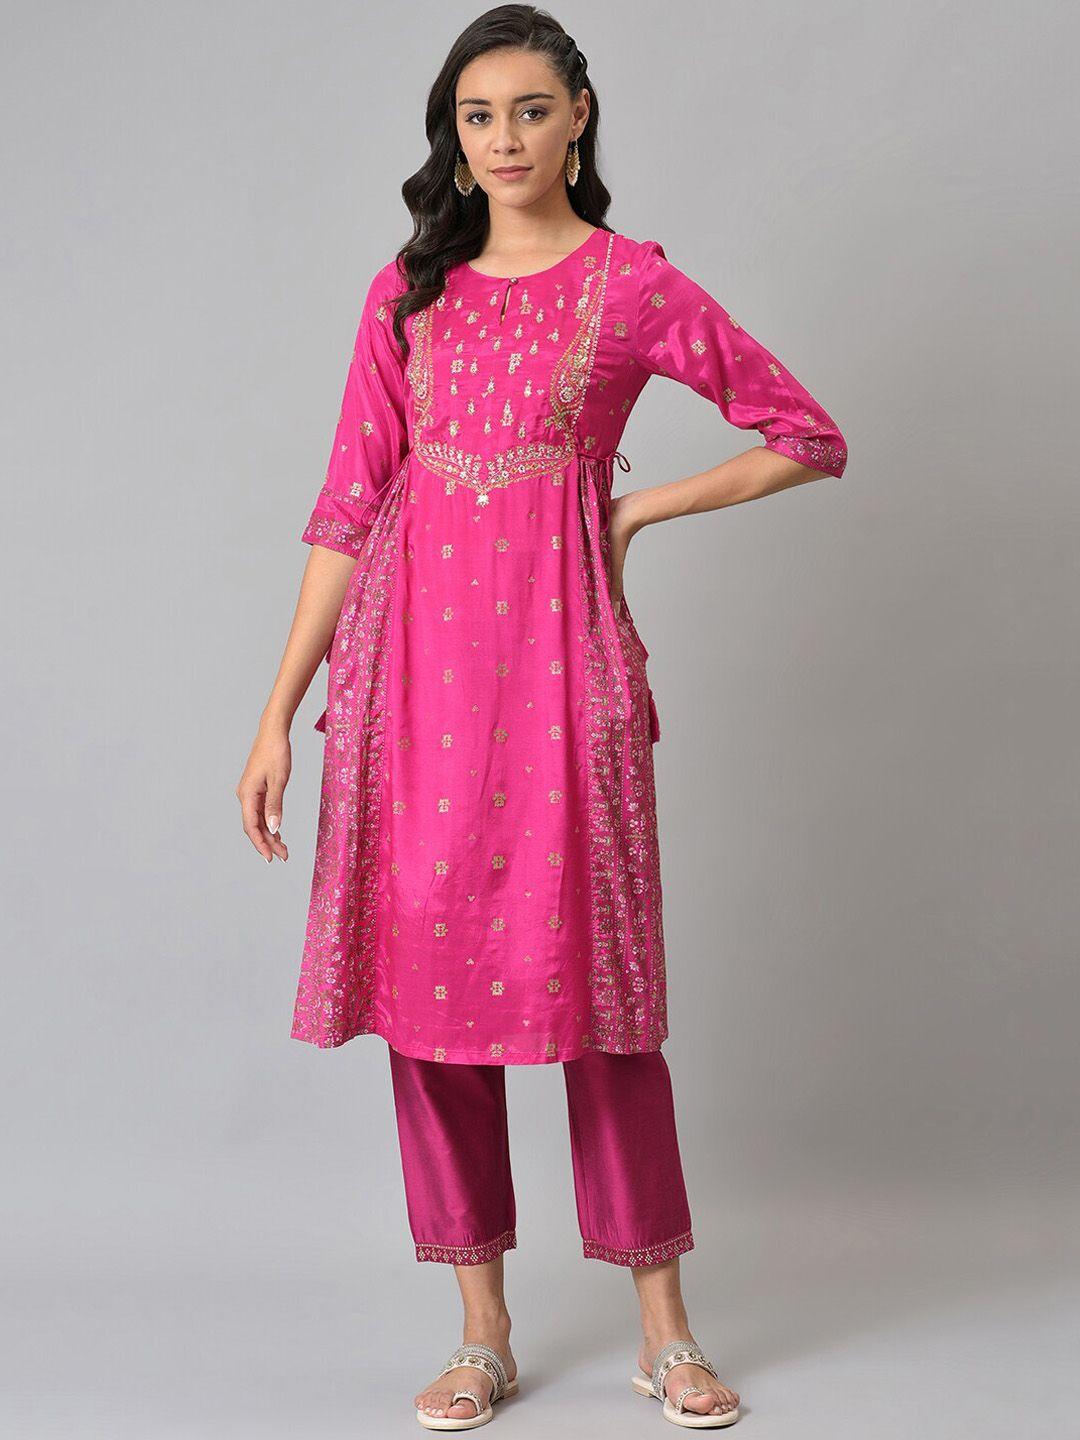 w women pink ethnic motifs embellished handloom anarkali kurta